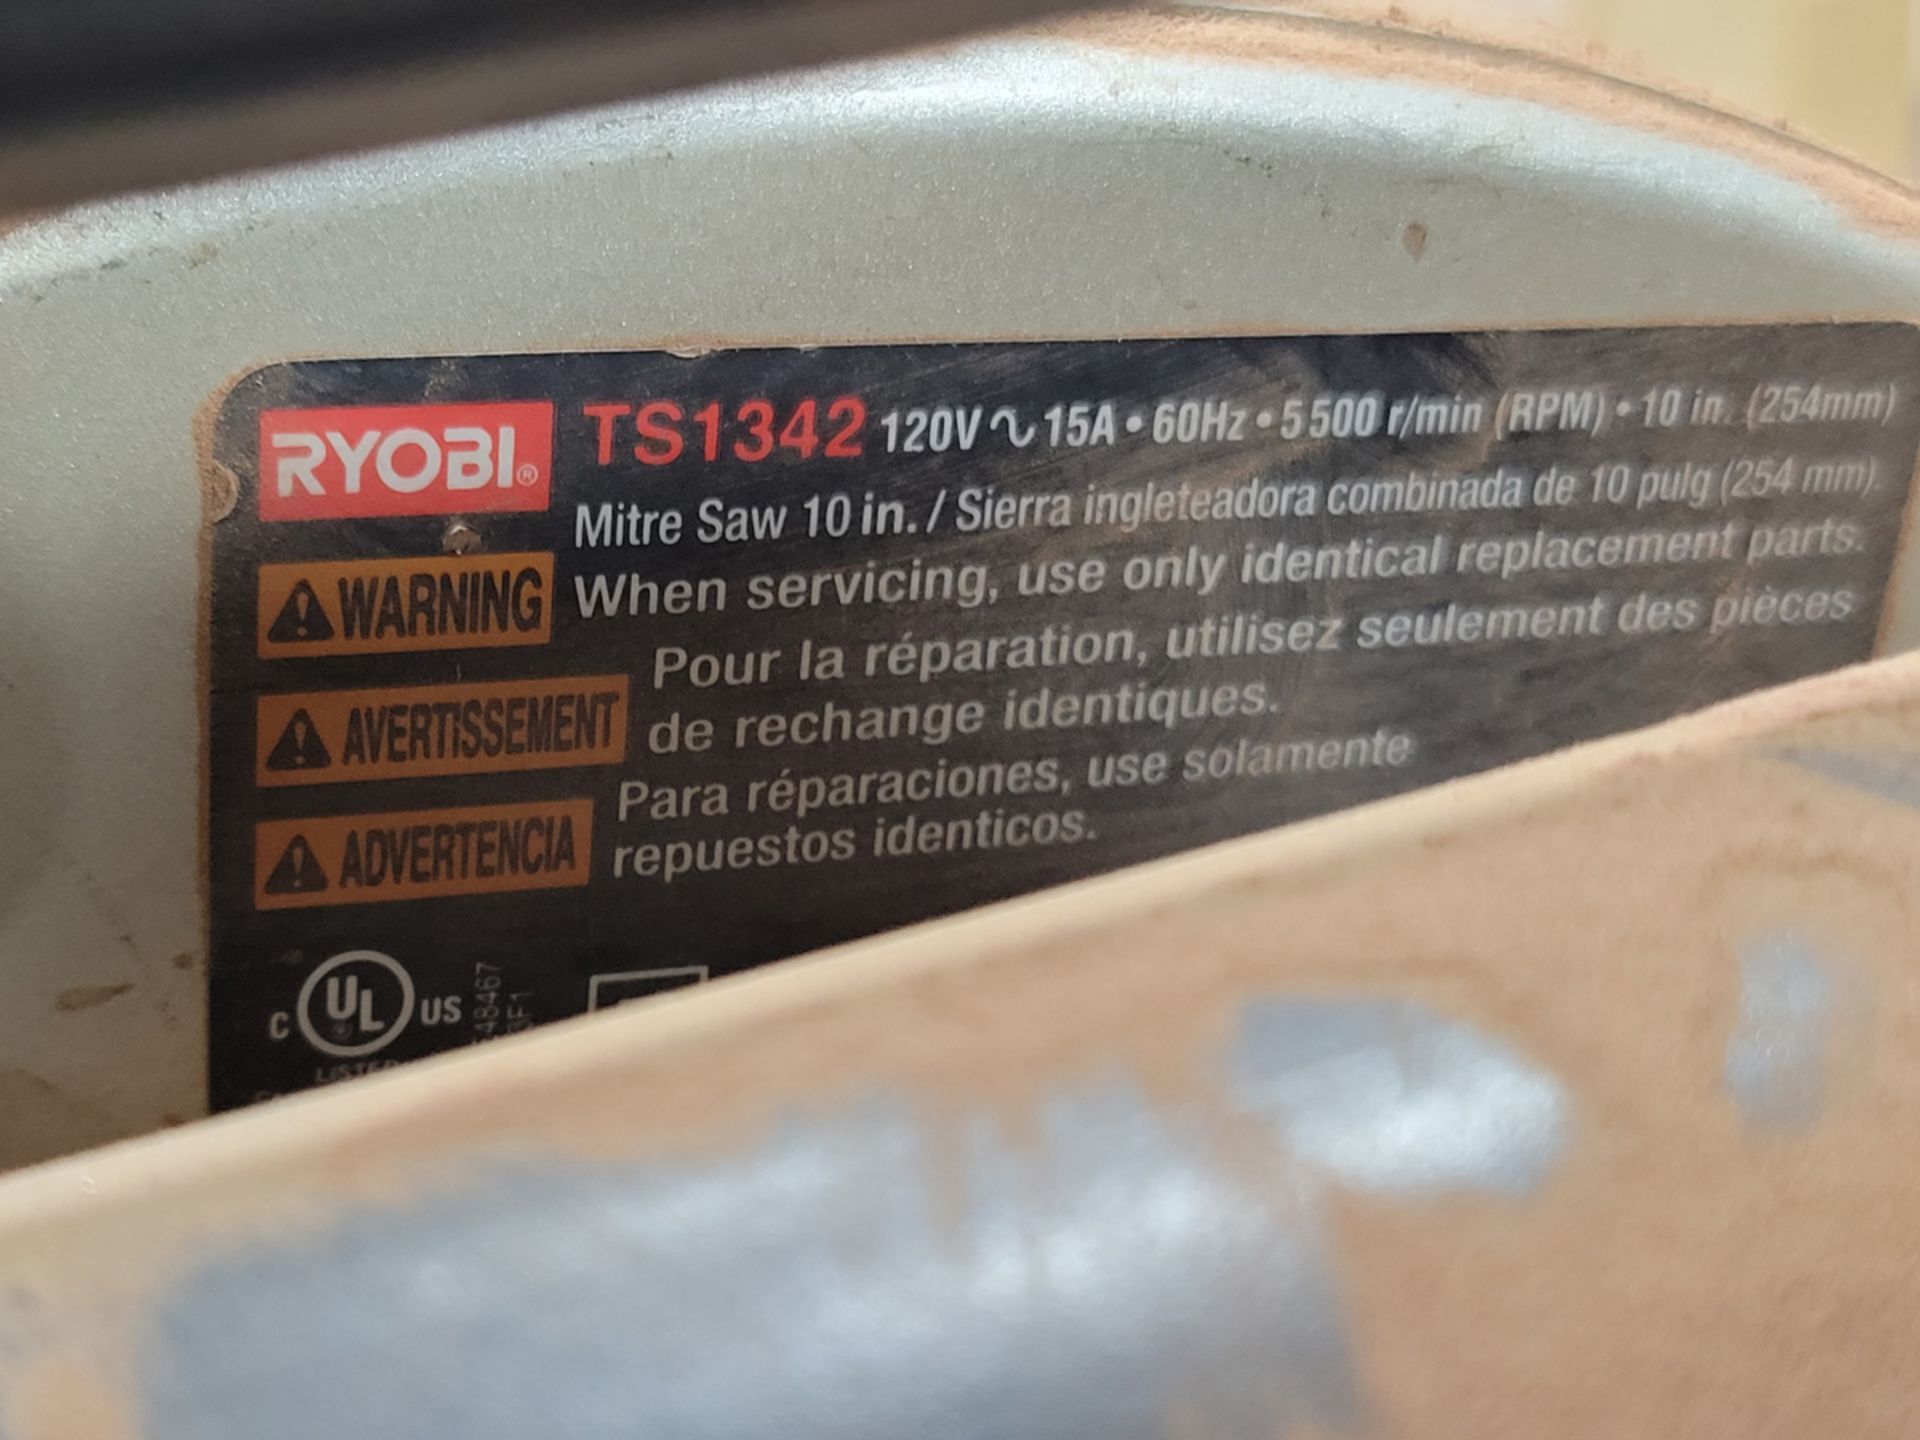 Ryobi TS1342 10" Compound Miter Saw - Image 5 of 5